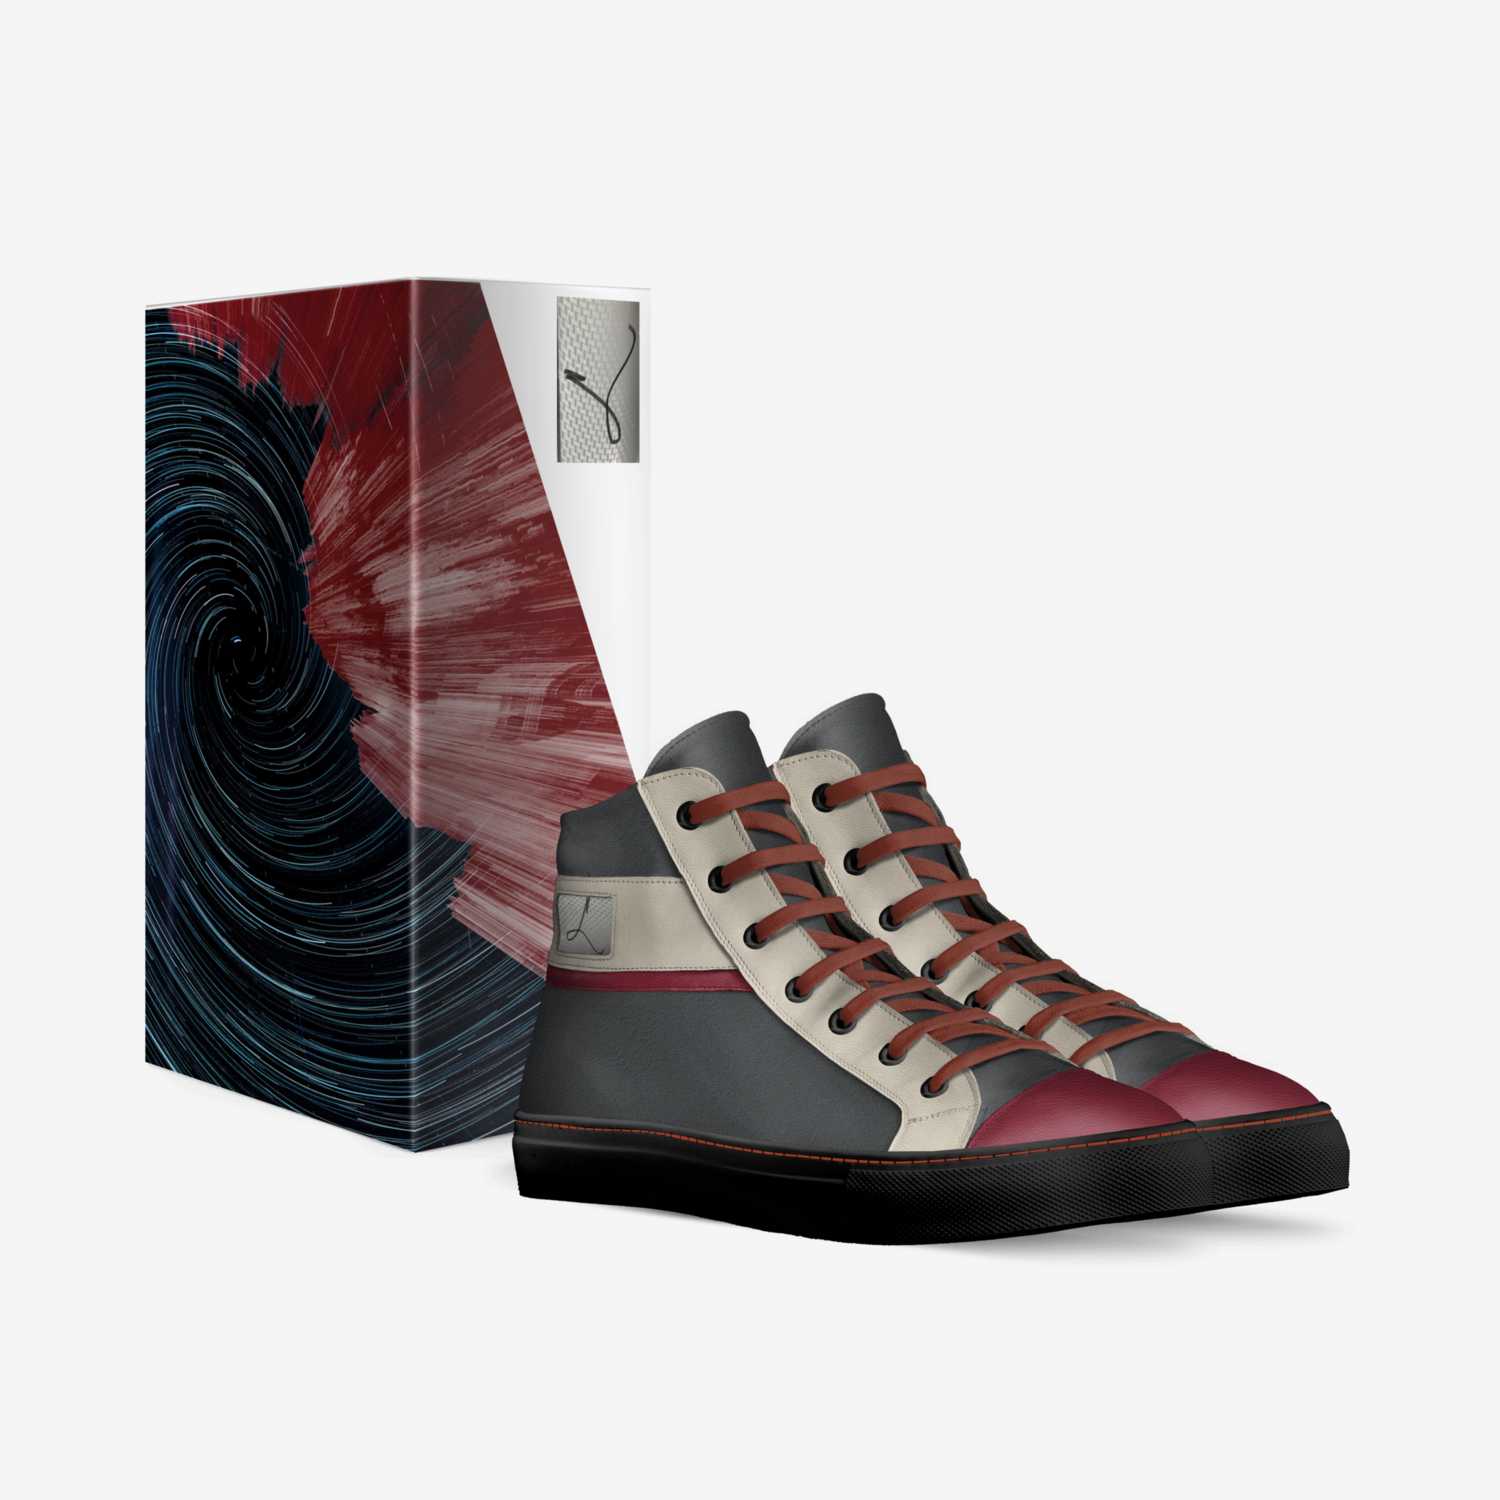 Lene custom made in Italy shoes by Marlene Hardaman | Box view